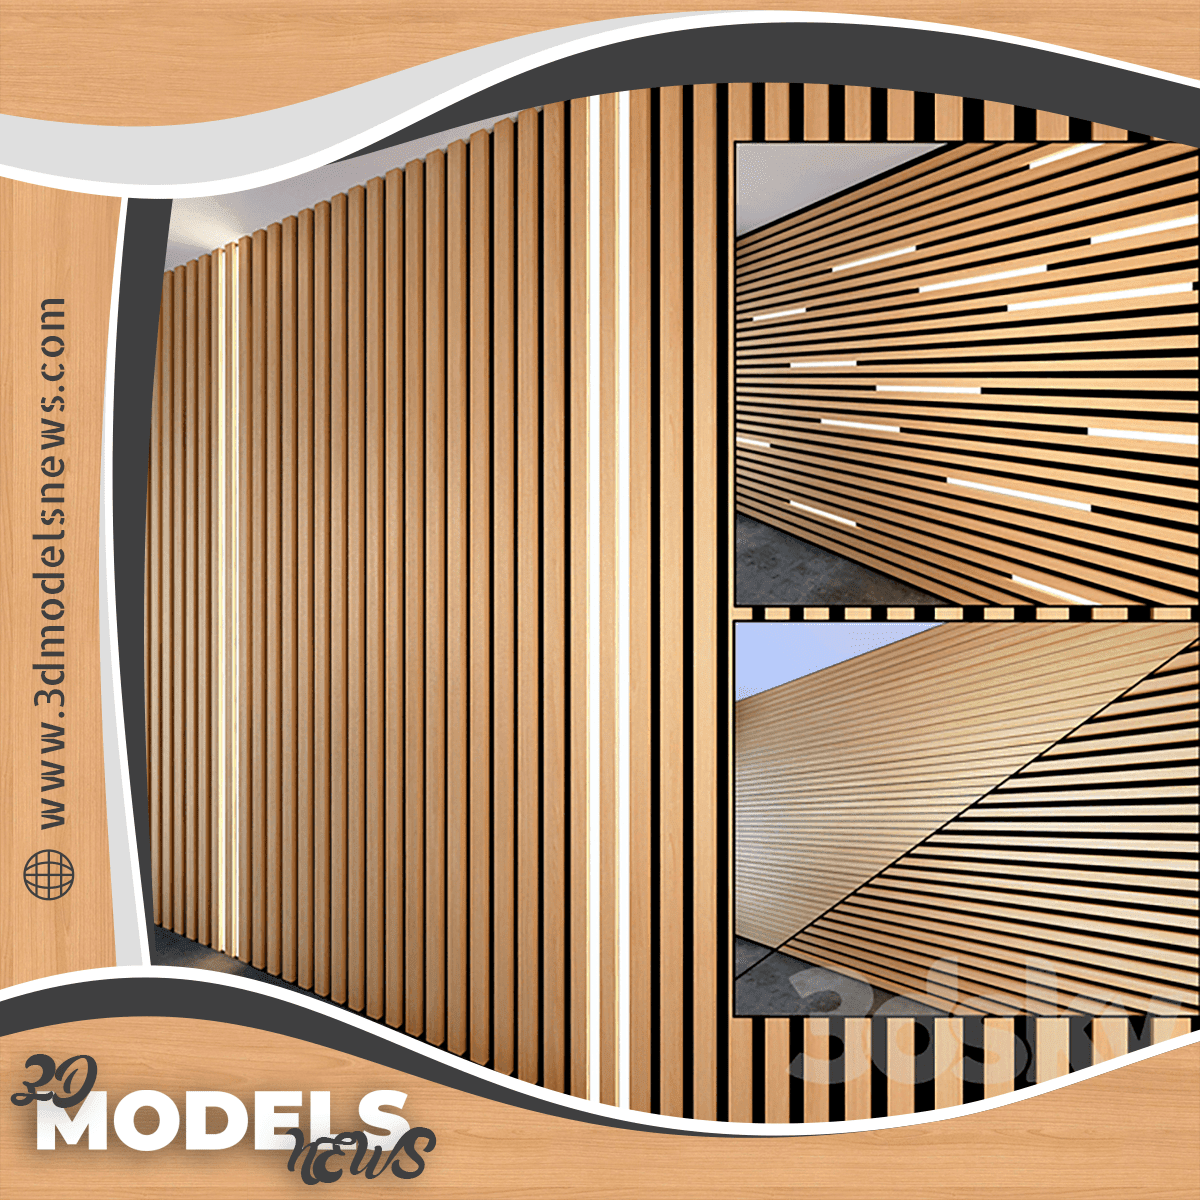 Wall decor model wooden slats